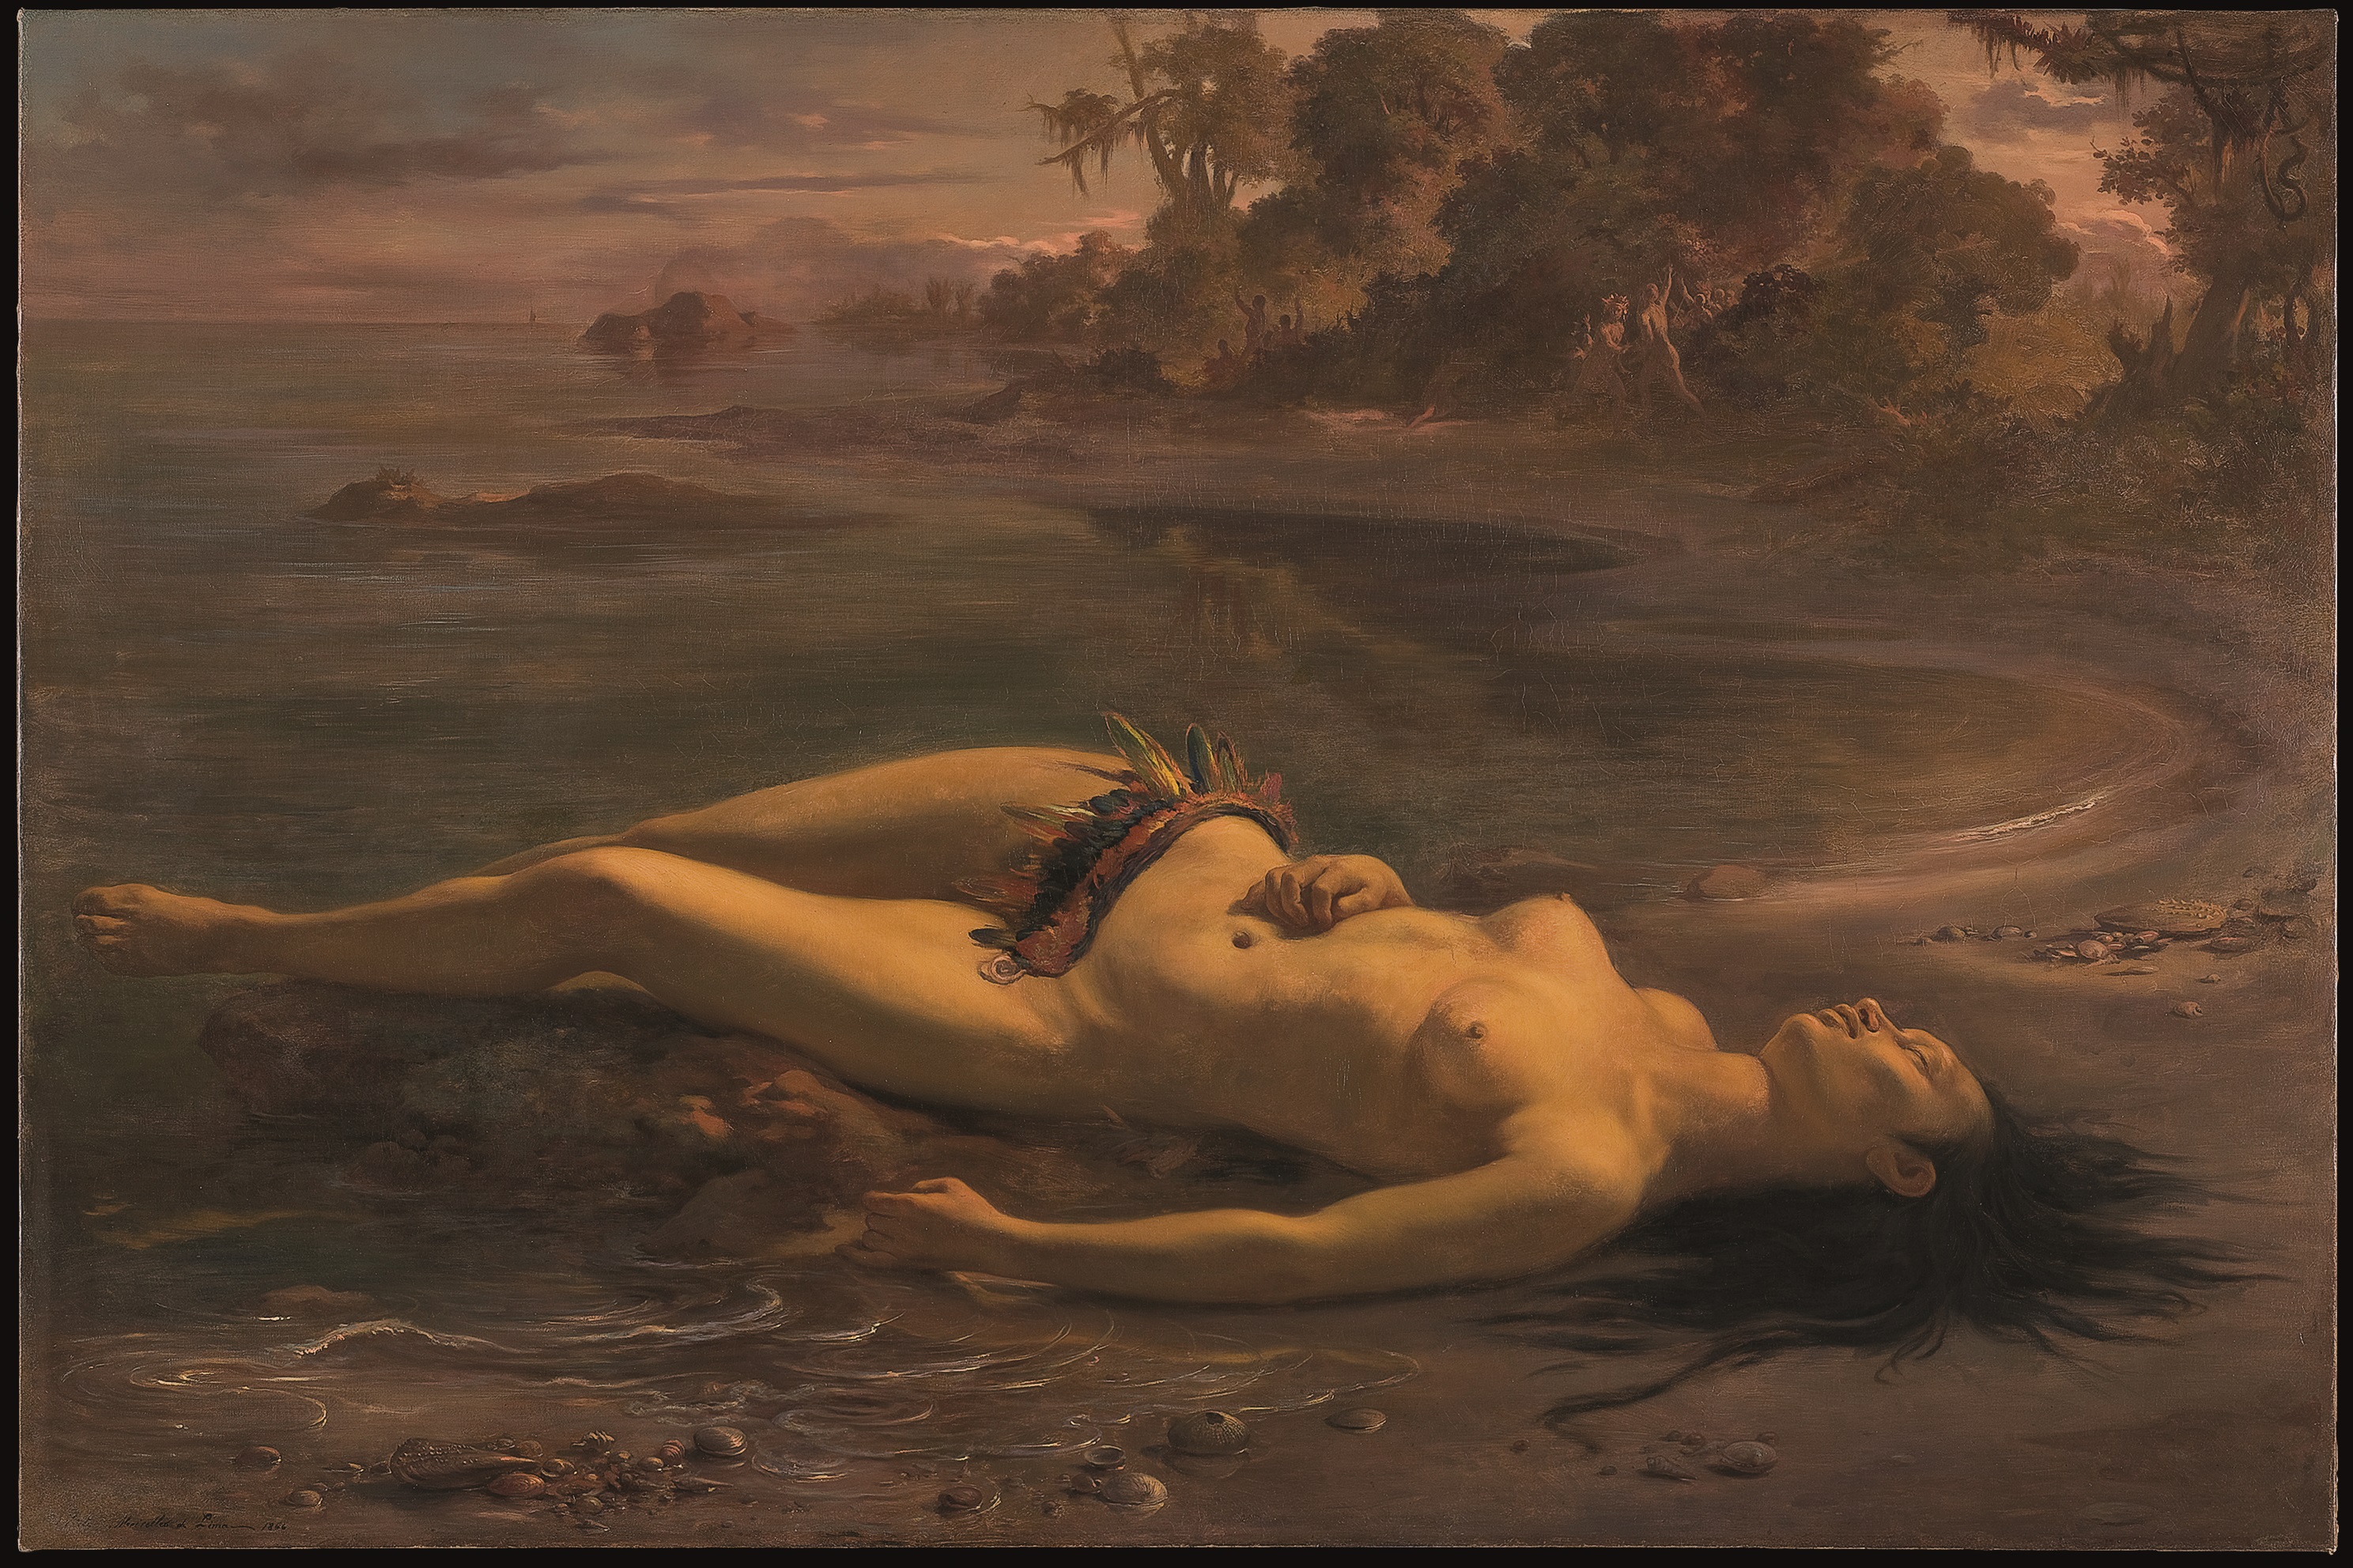 Моэма by Victor Meirelles - 1866 - 129 x 199 см 